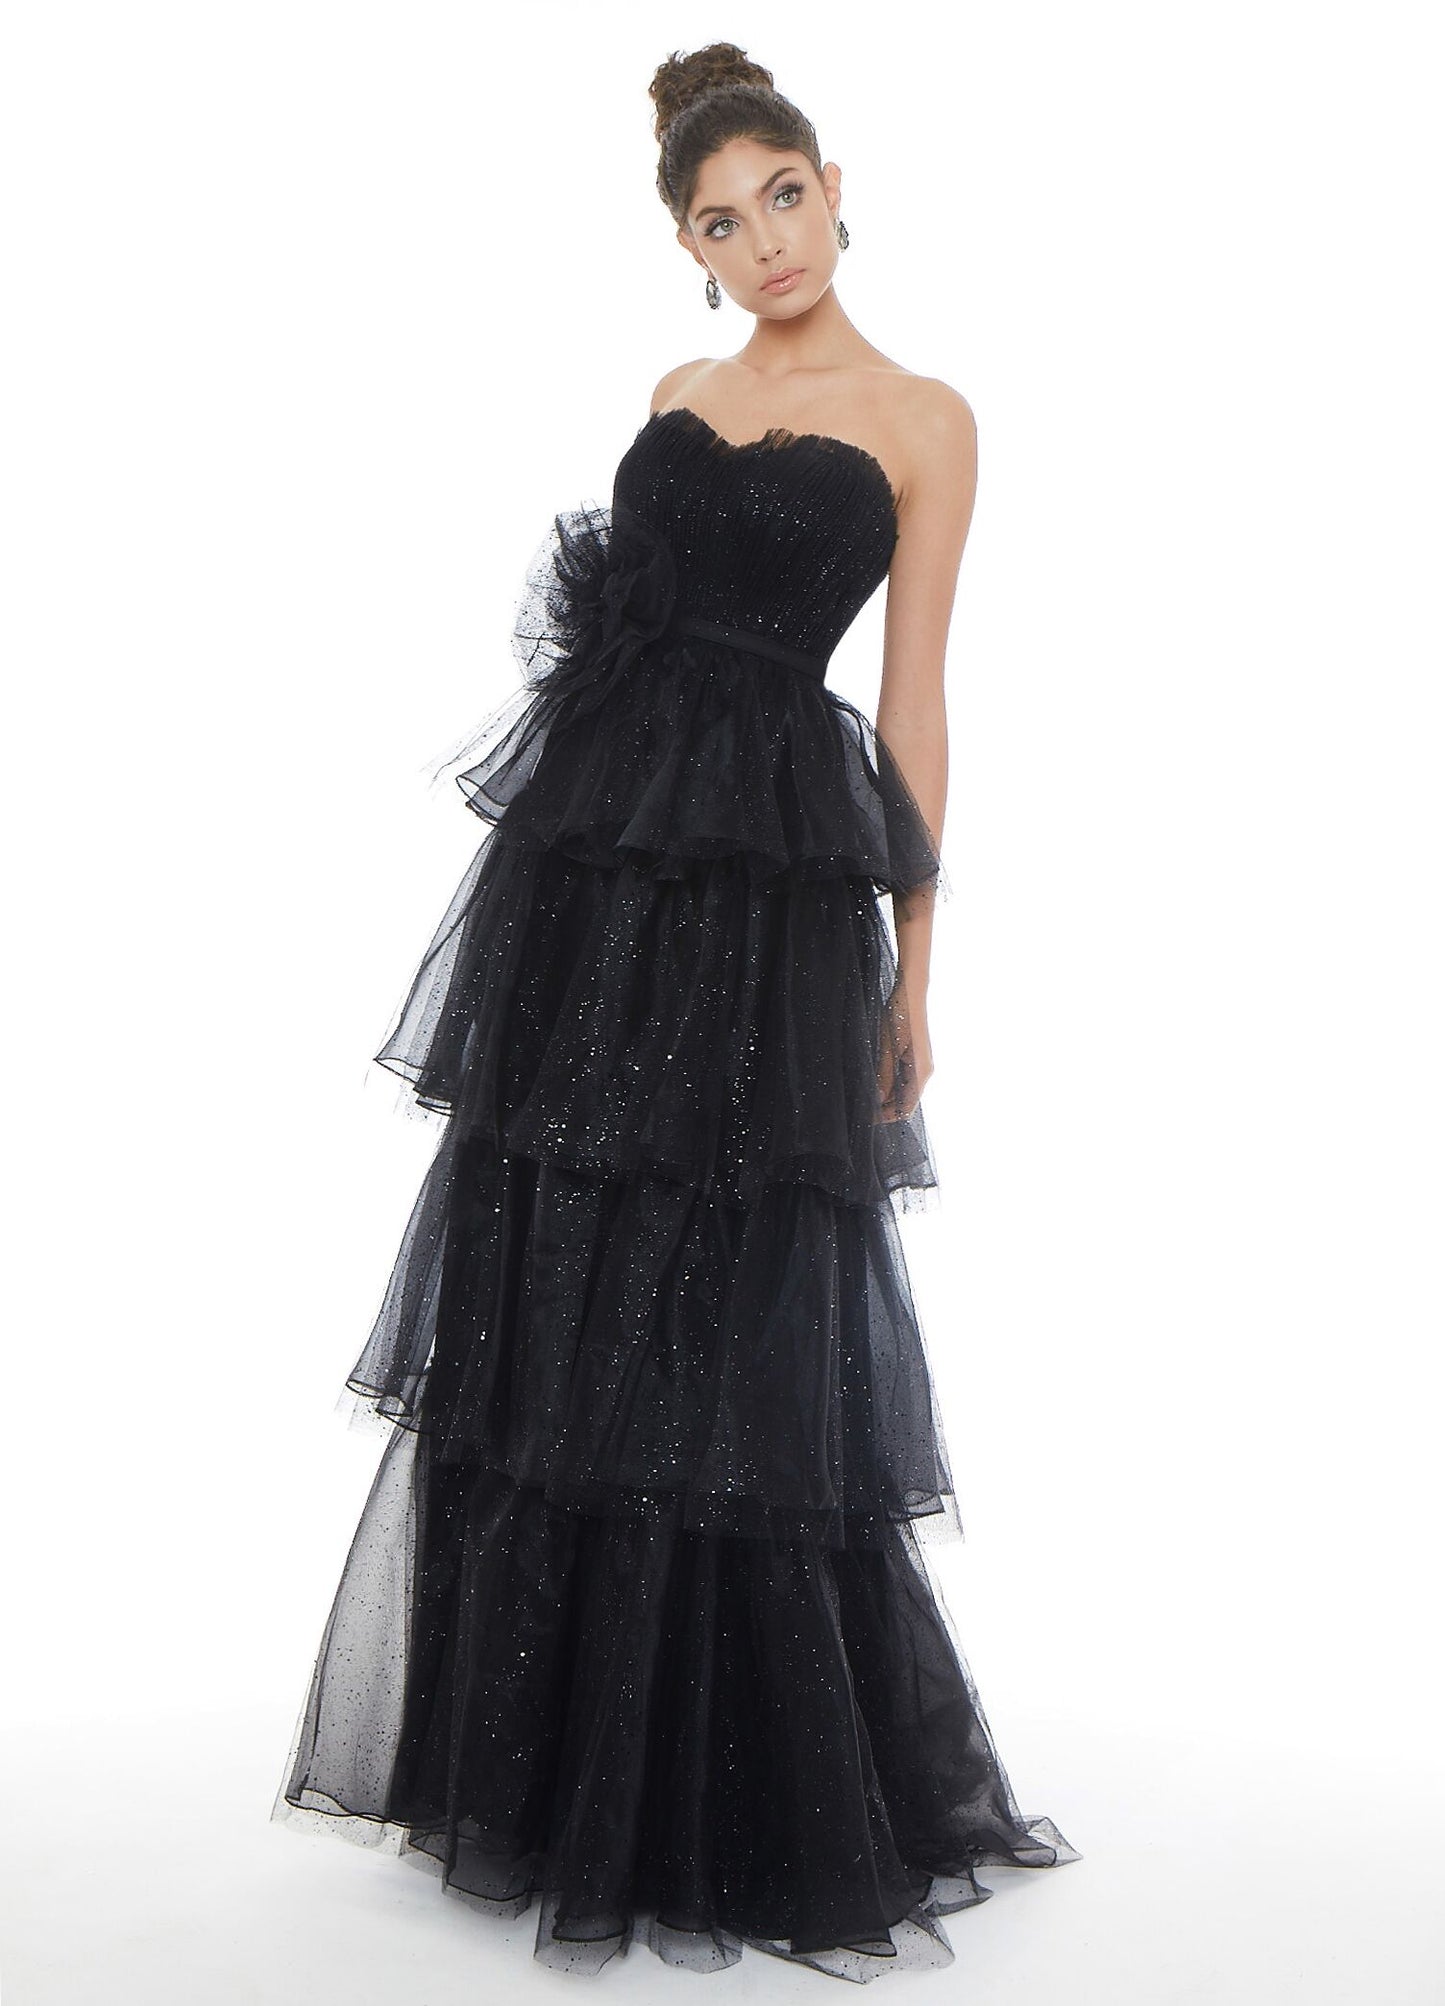 Ashley Lauren 1709 Glass Slipper Formals Lake City Florida Black Prom Dress Front View Formal Evening Dresses